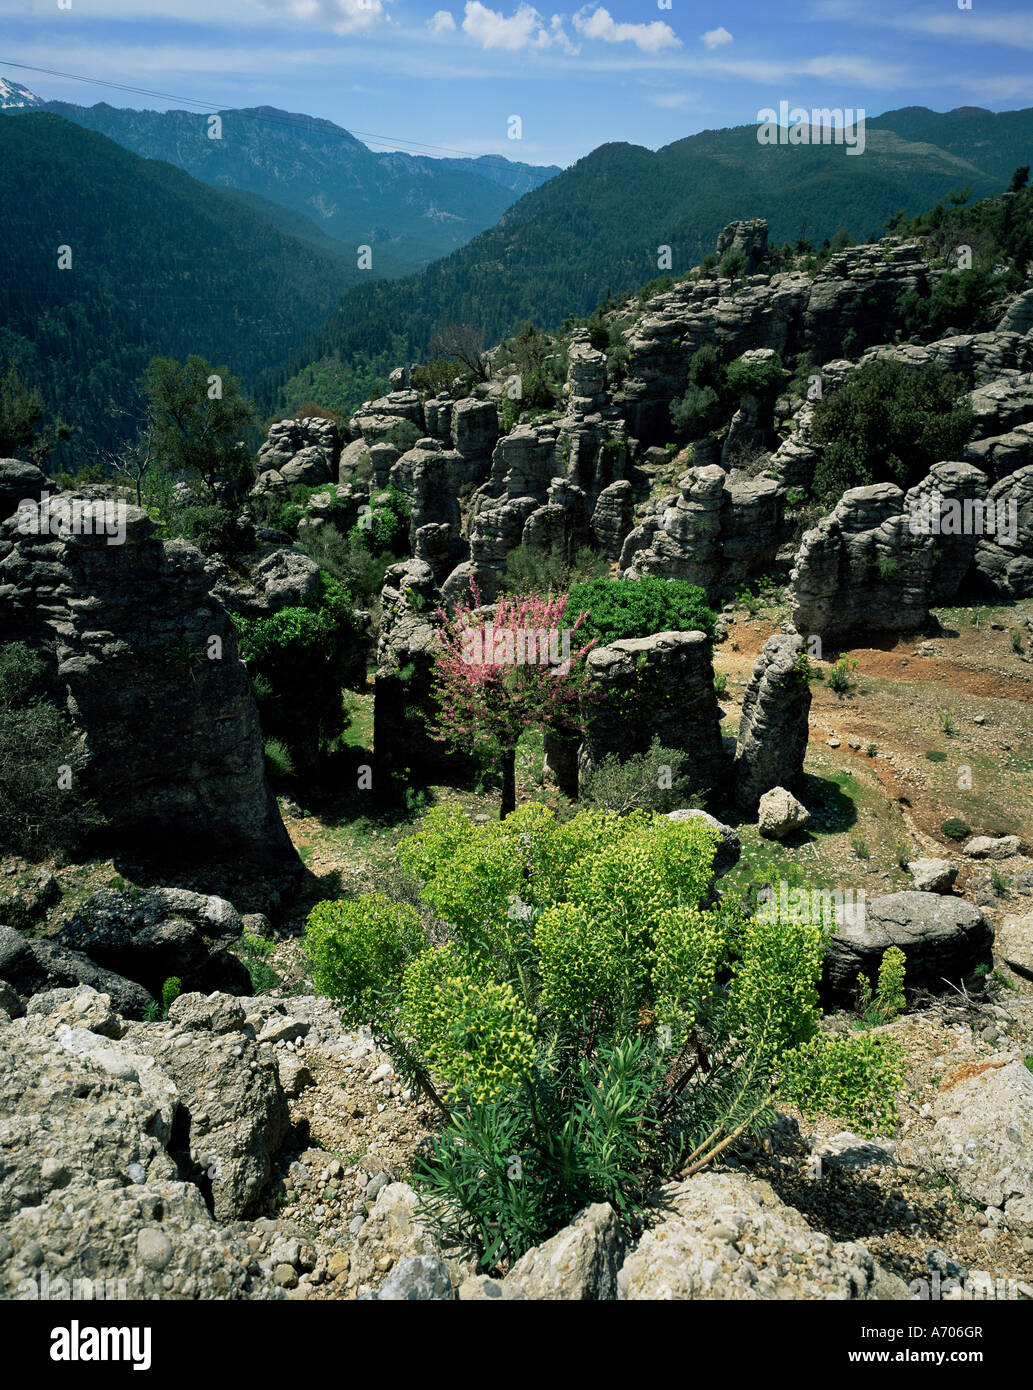 Blütenpflanzen und Felsformationen Koprolu National Park Antalya Anatolien Türkei Eurasia Stockfoto